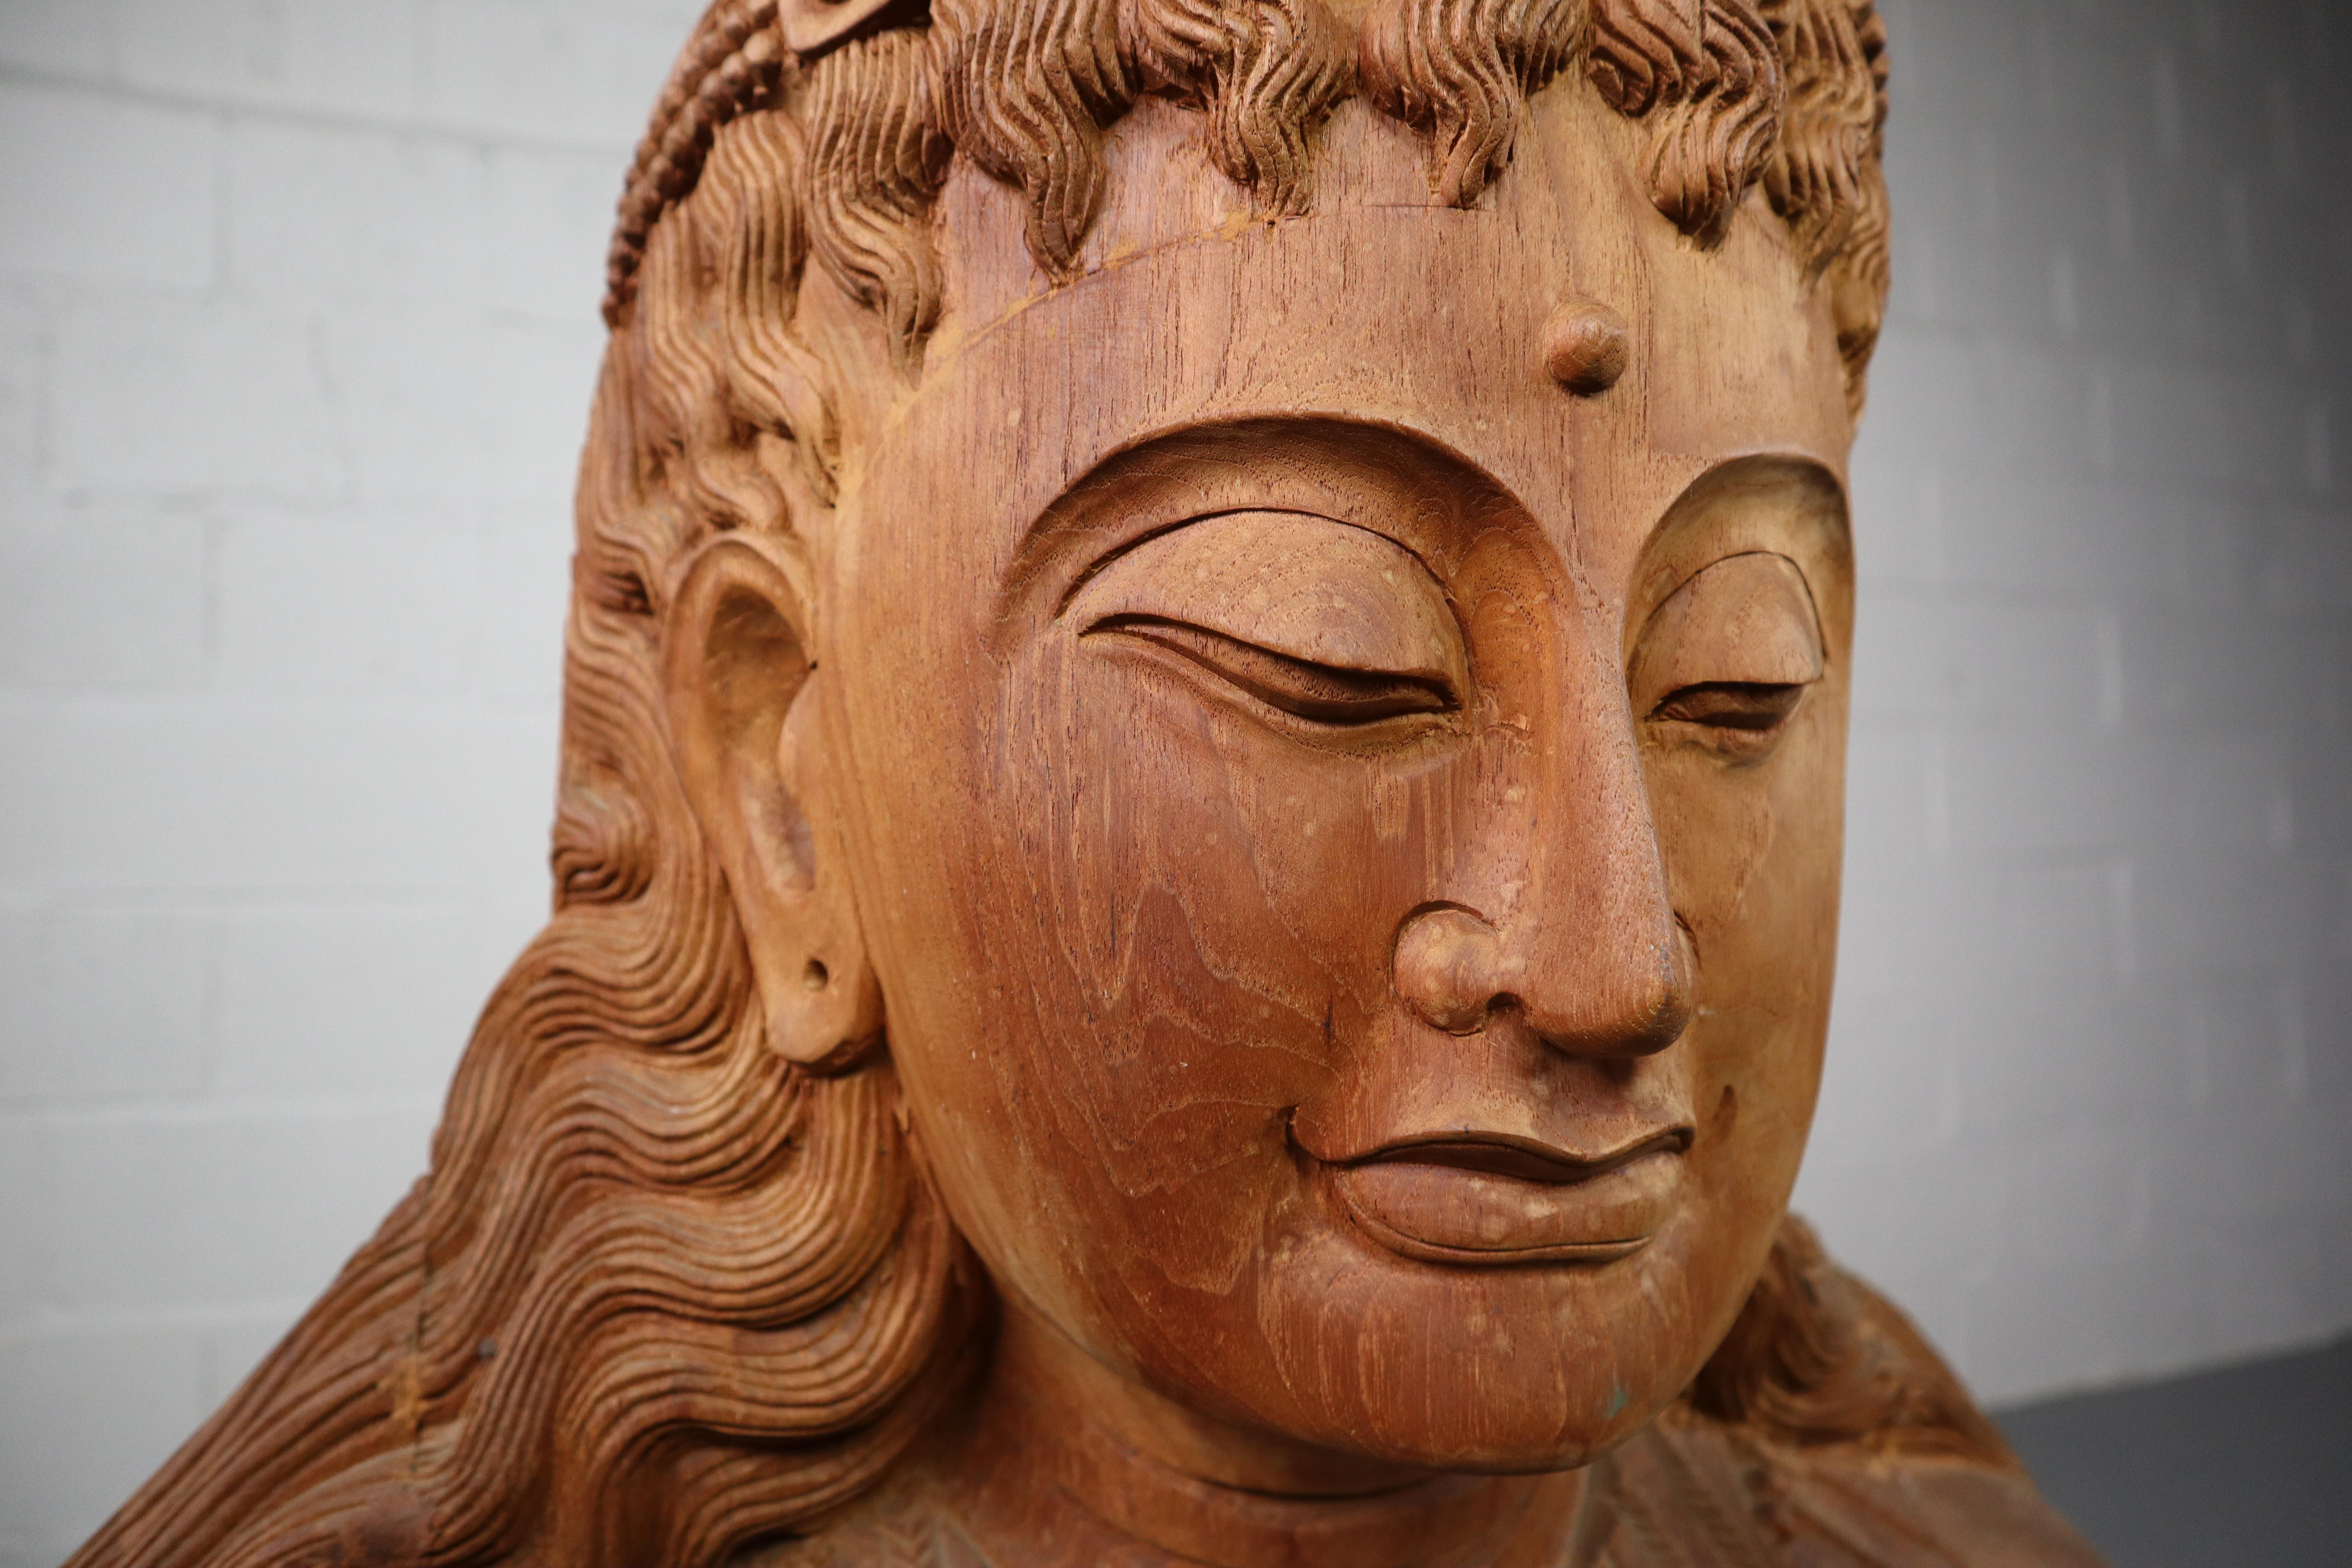 A vintage hardwood carved Buddha bust sculpture decorative object.